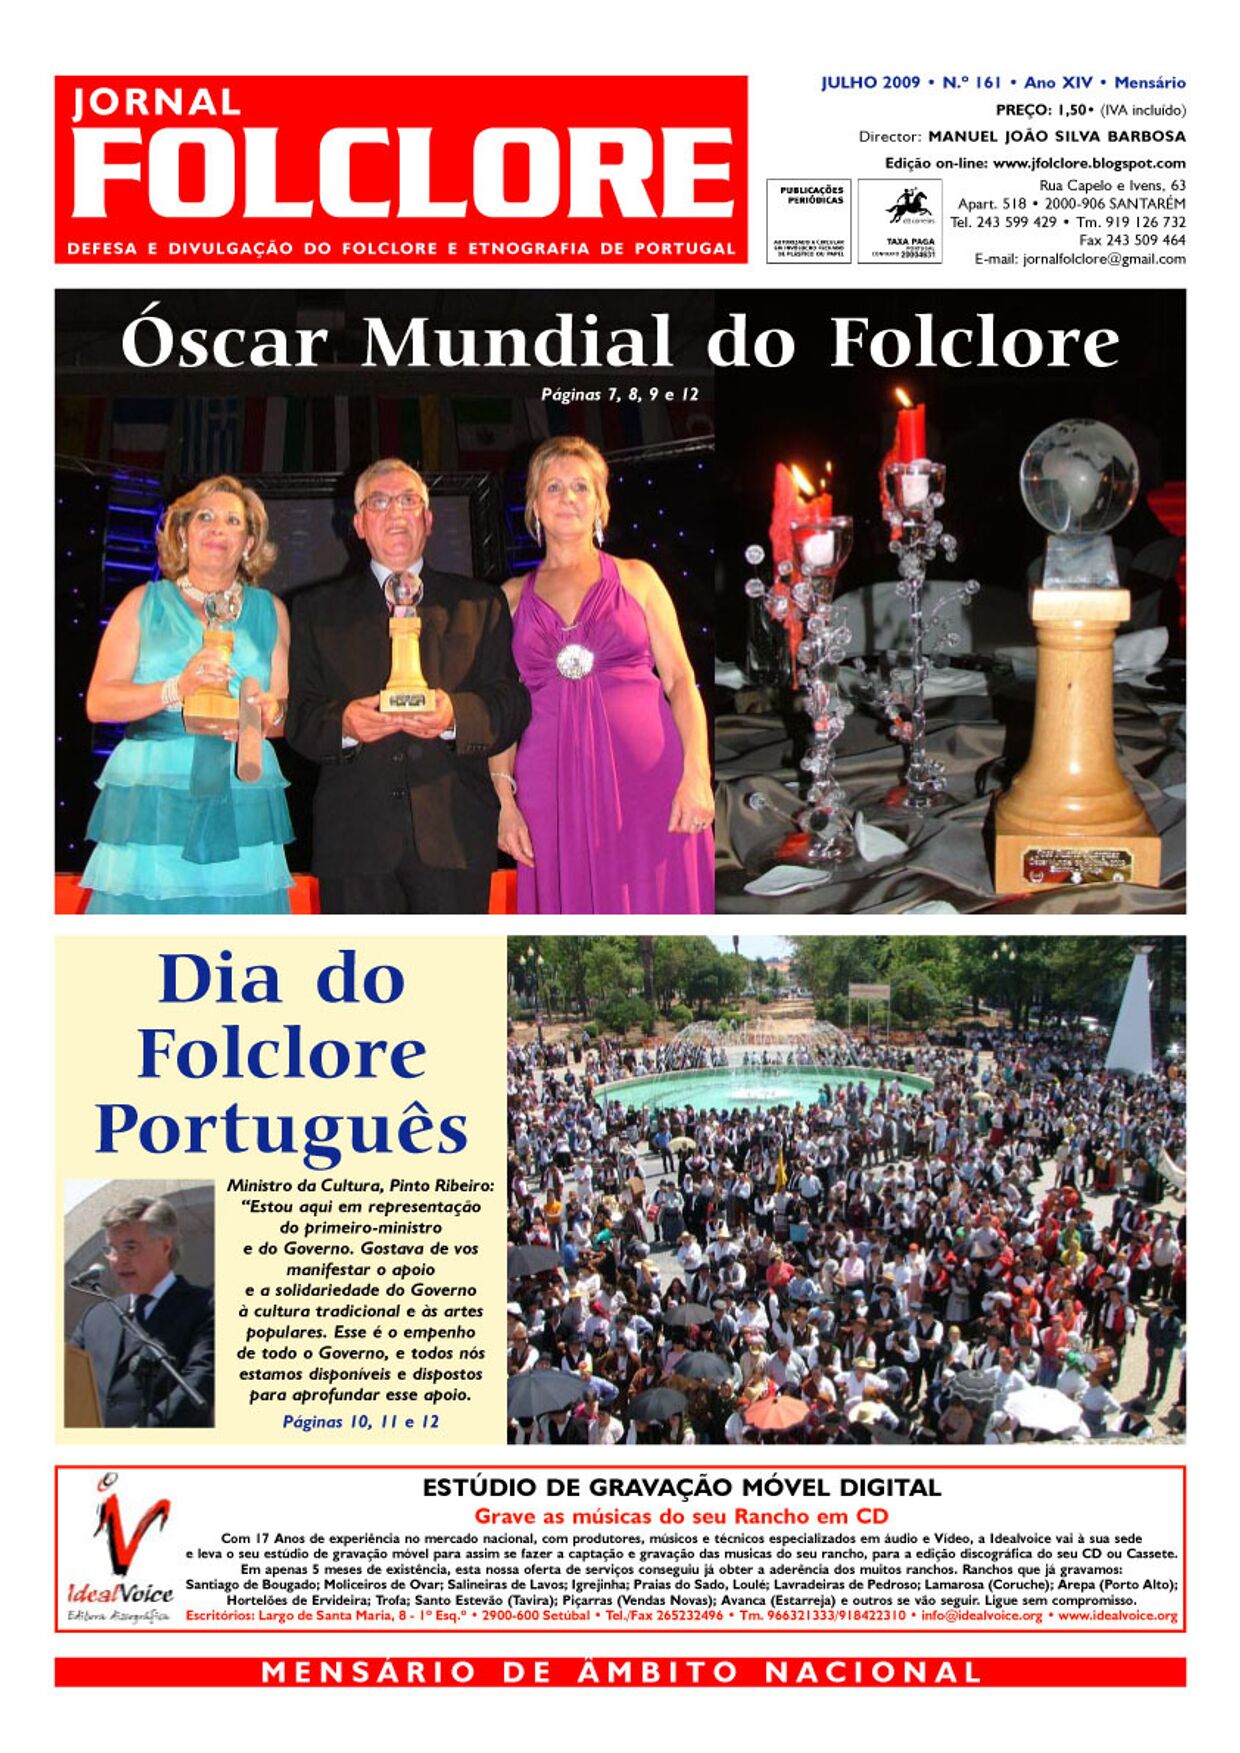 Страница журнала Jornal Folclore